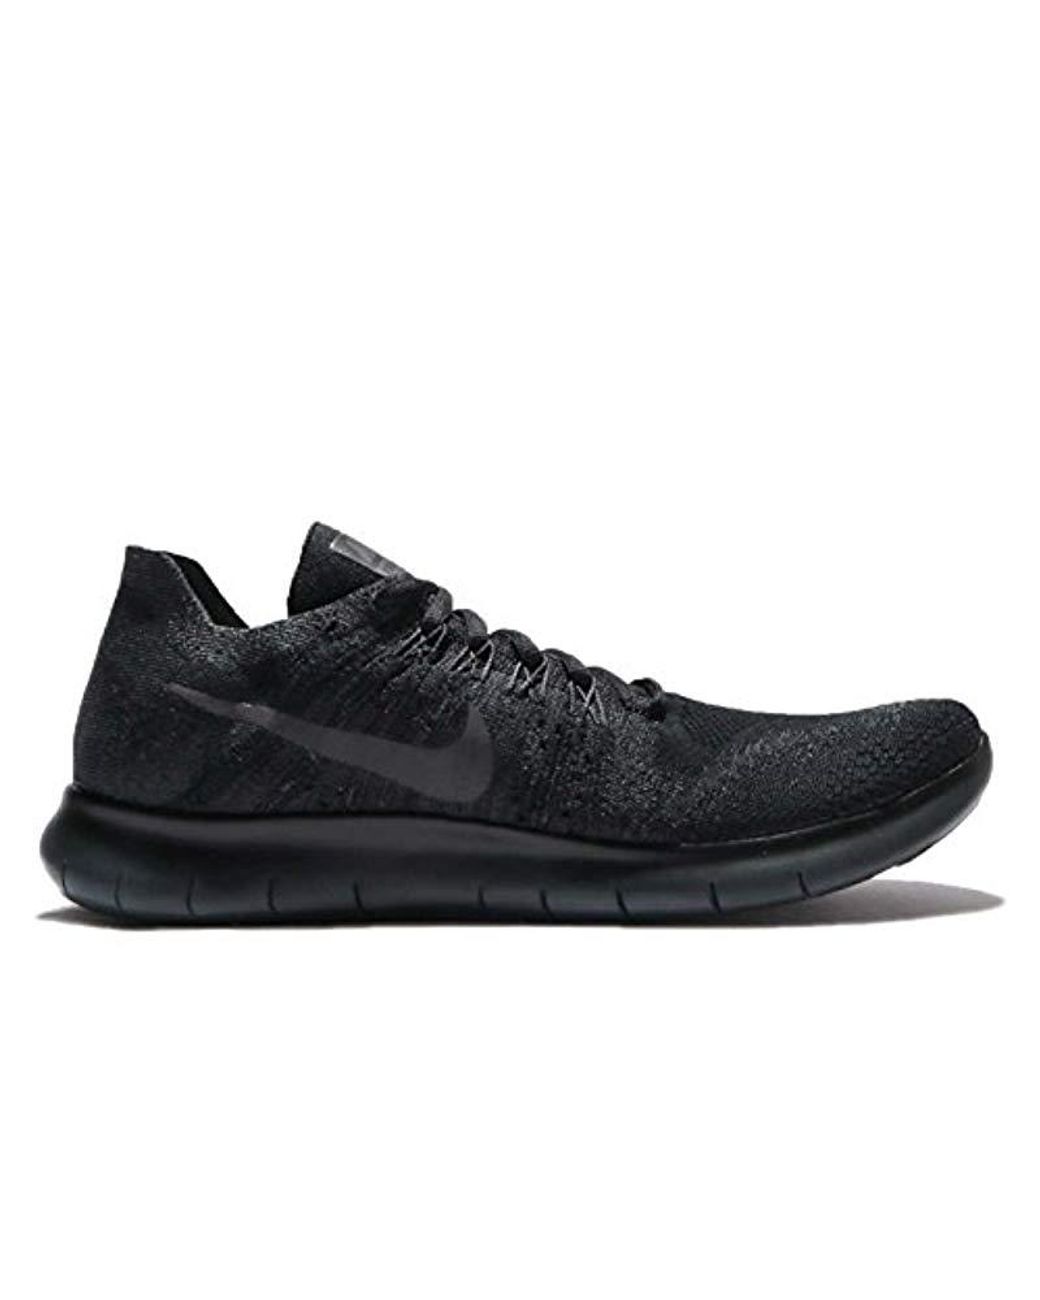 Nike Free Run Flyknit 2017 Running Shoes Black Size: 13 Uk for Men | Lyst UK